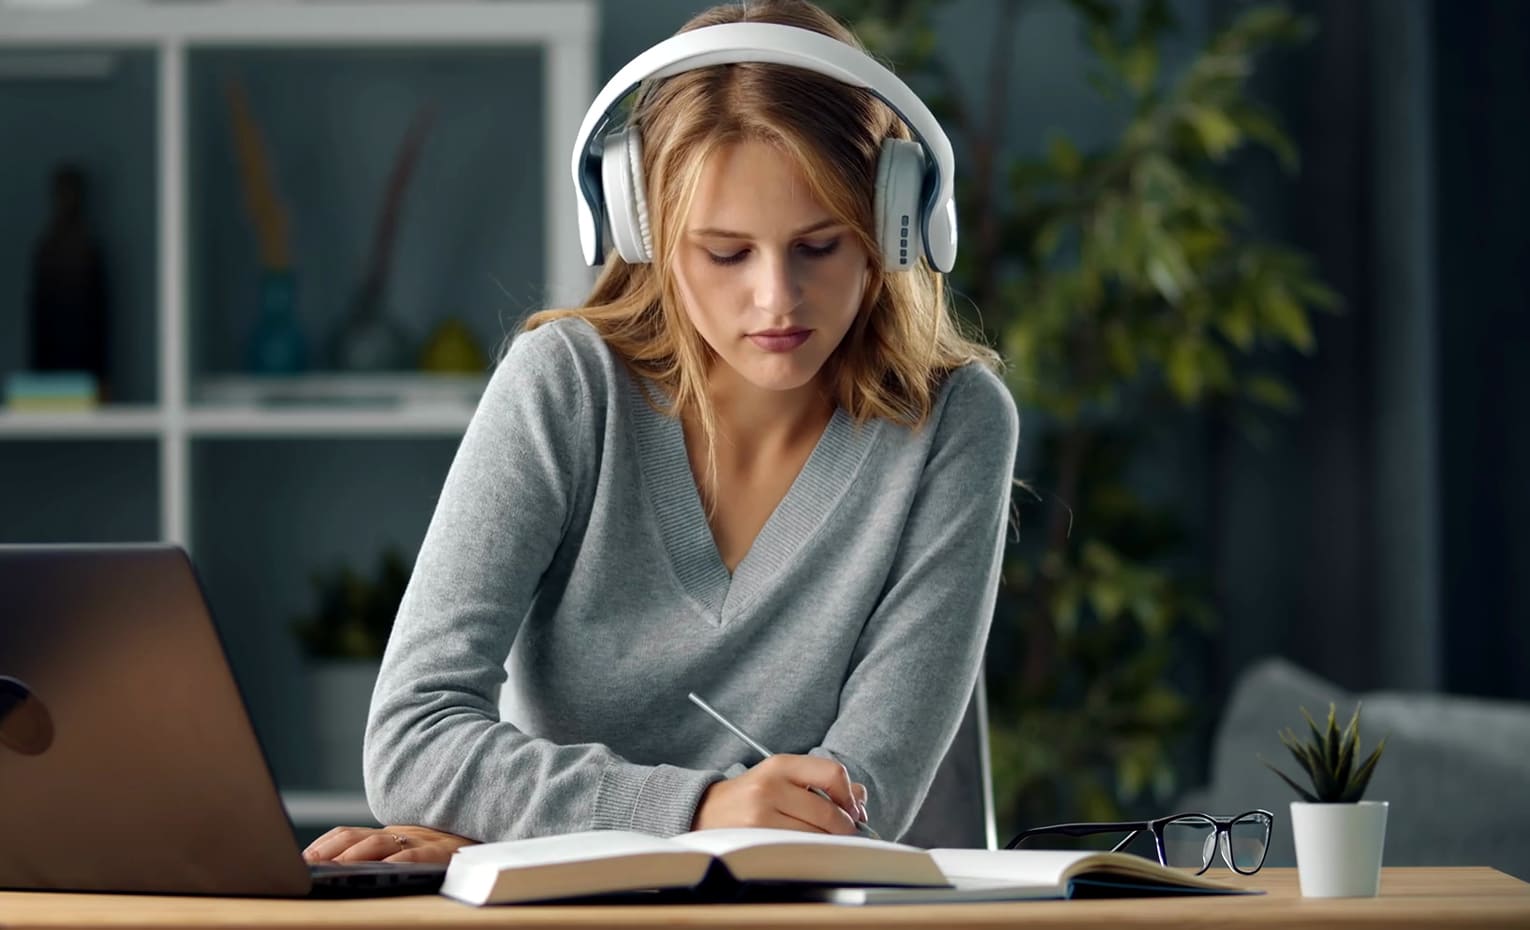 انتخاب هدفون مناسب برای هدیه | Choosing the right headphones for a gift